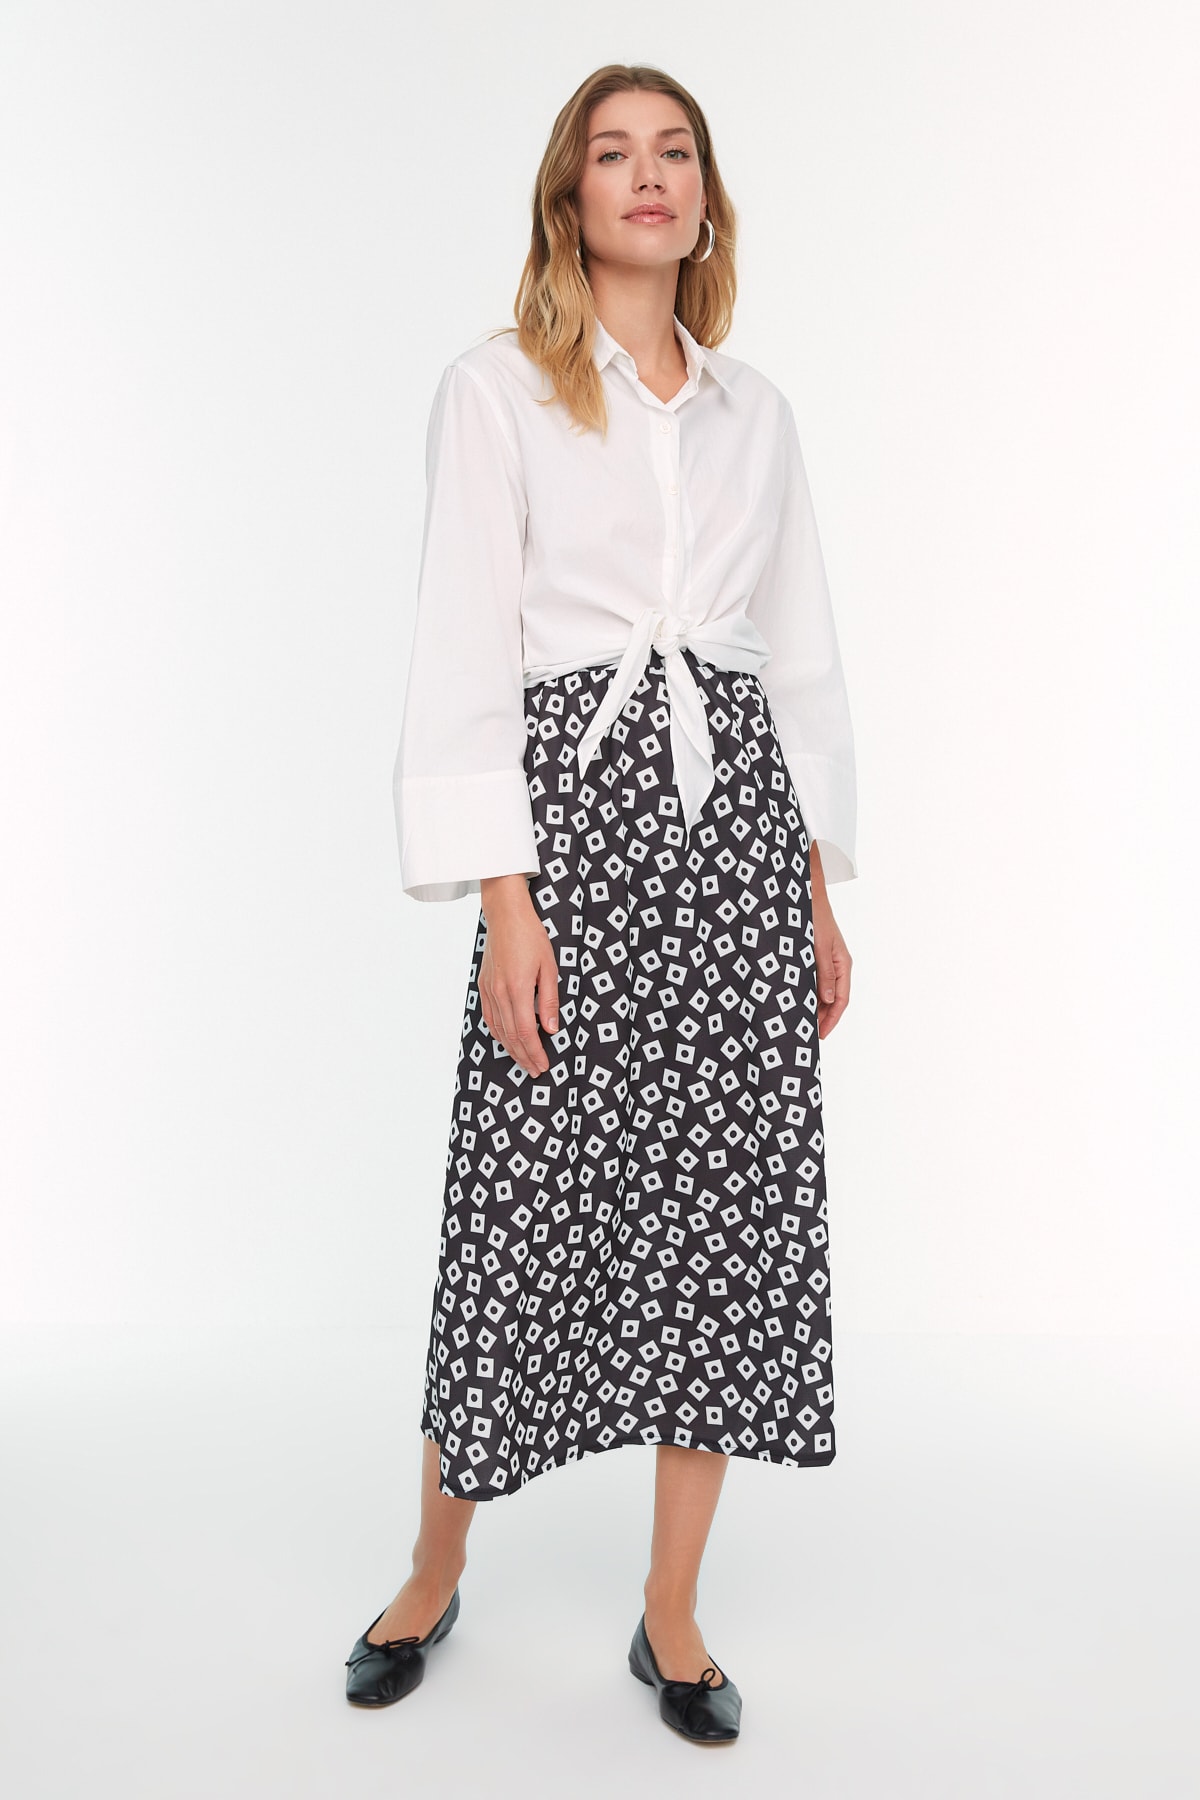 Trendyol Black and White Patterned Knitted Crepe Scuba Skirt